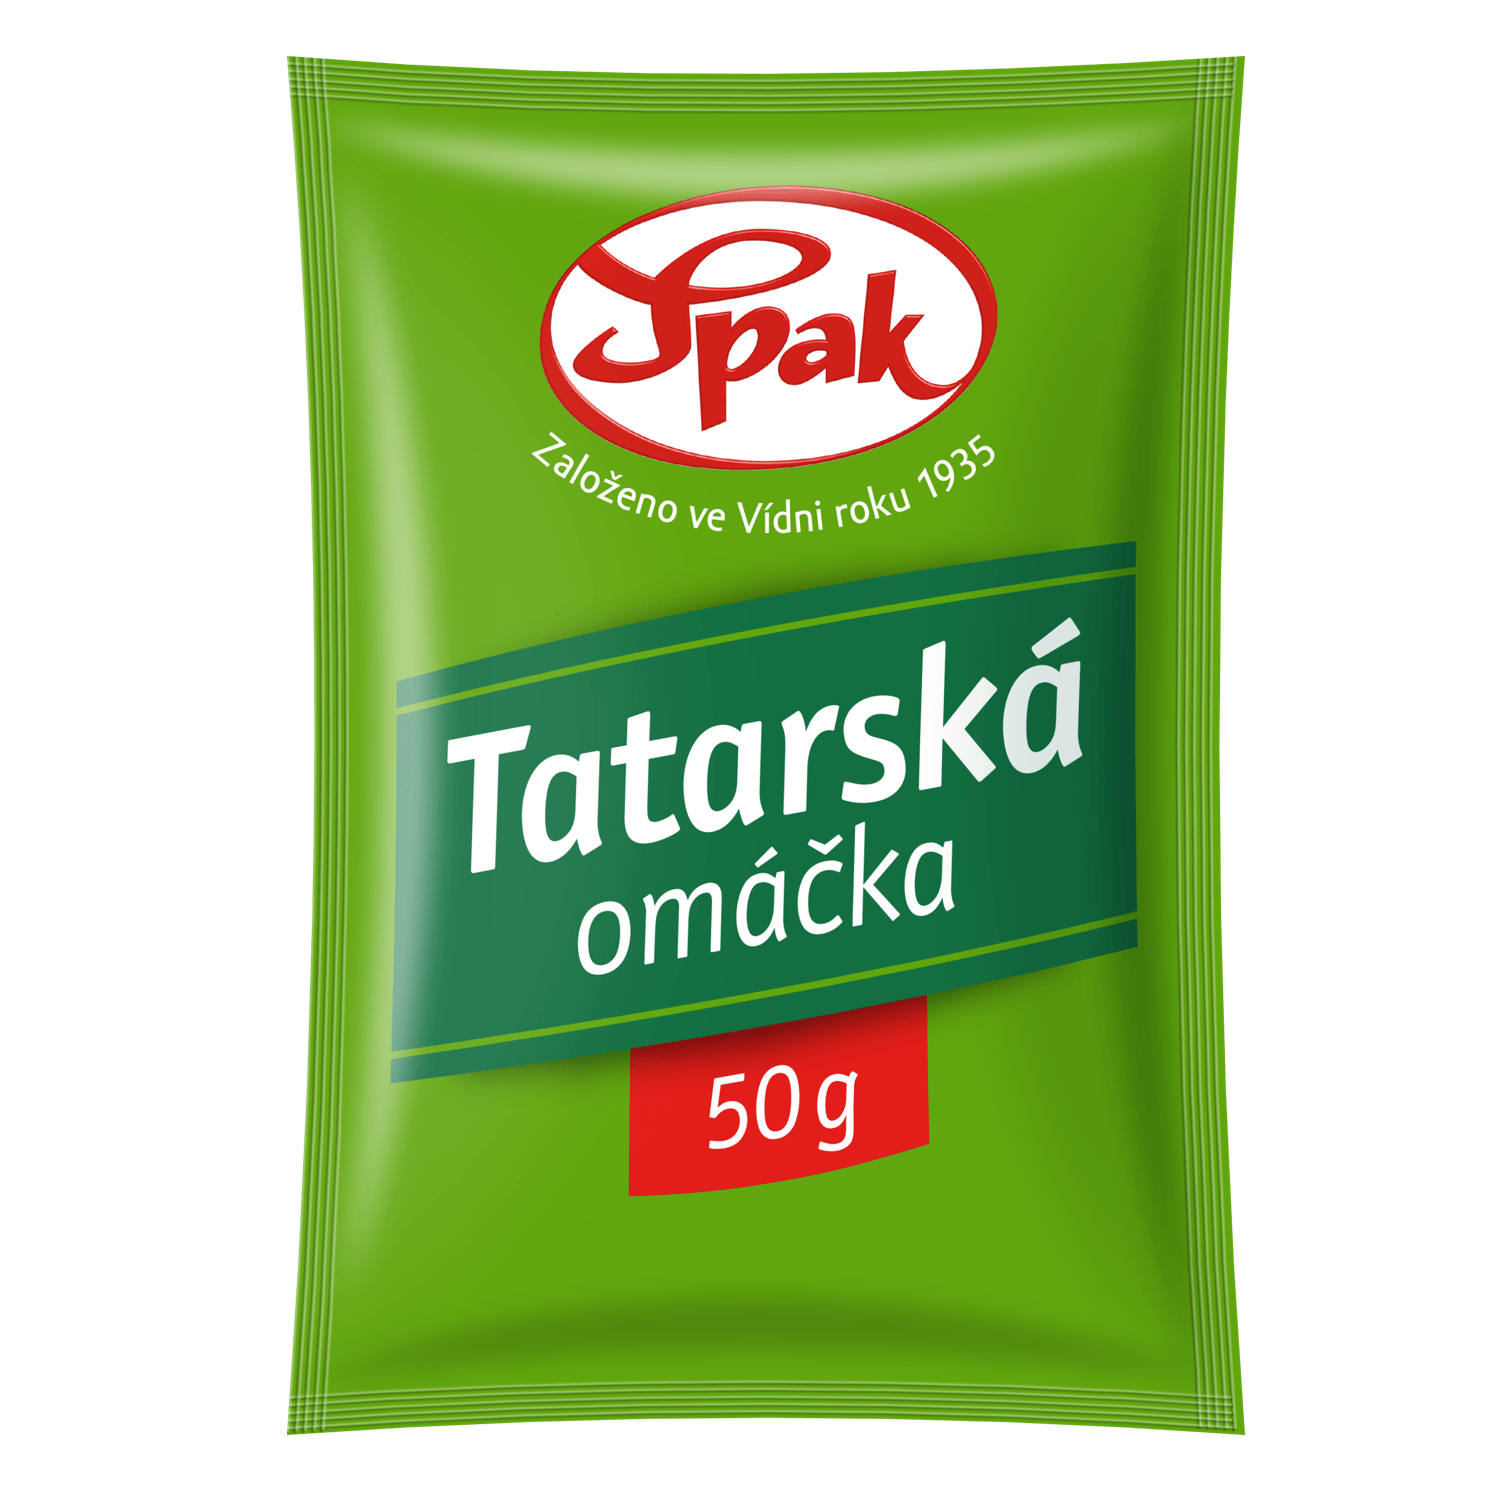 Tatarska-omacka-50g